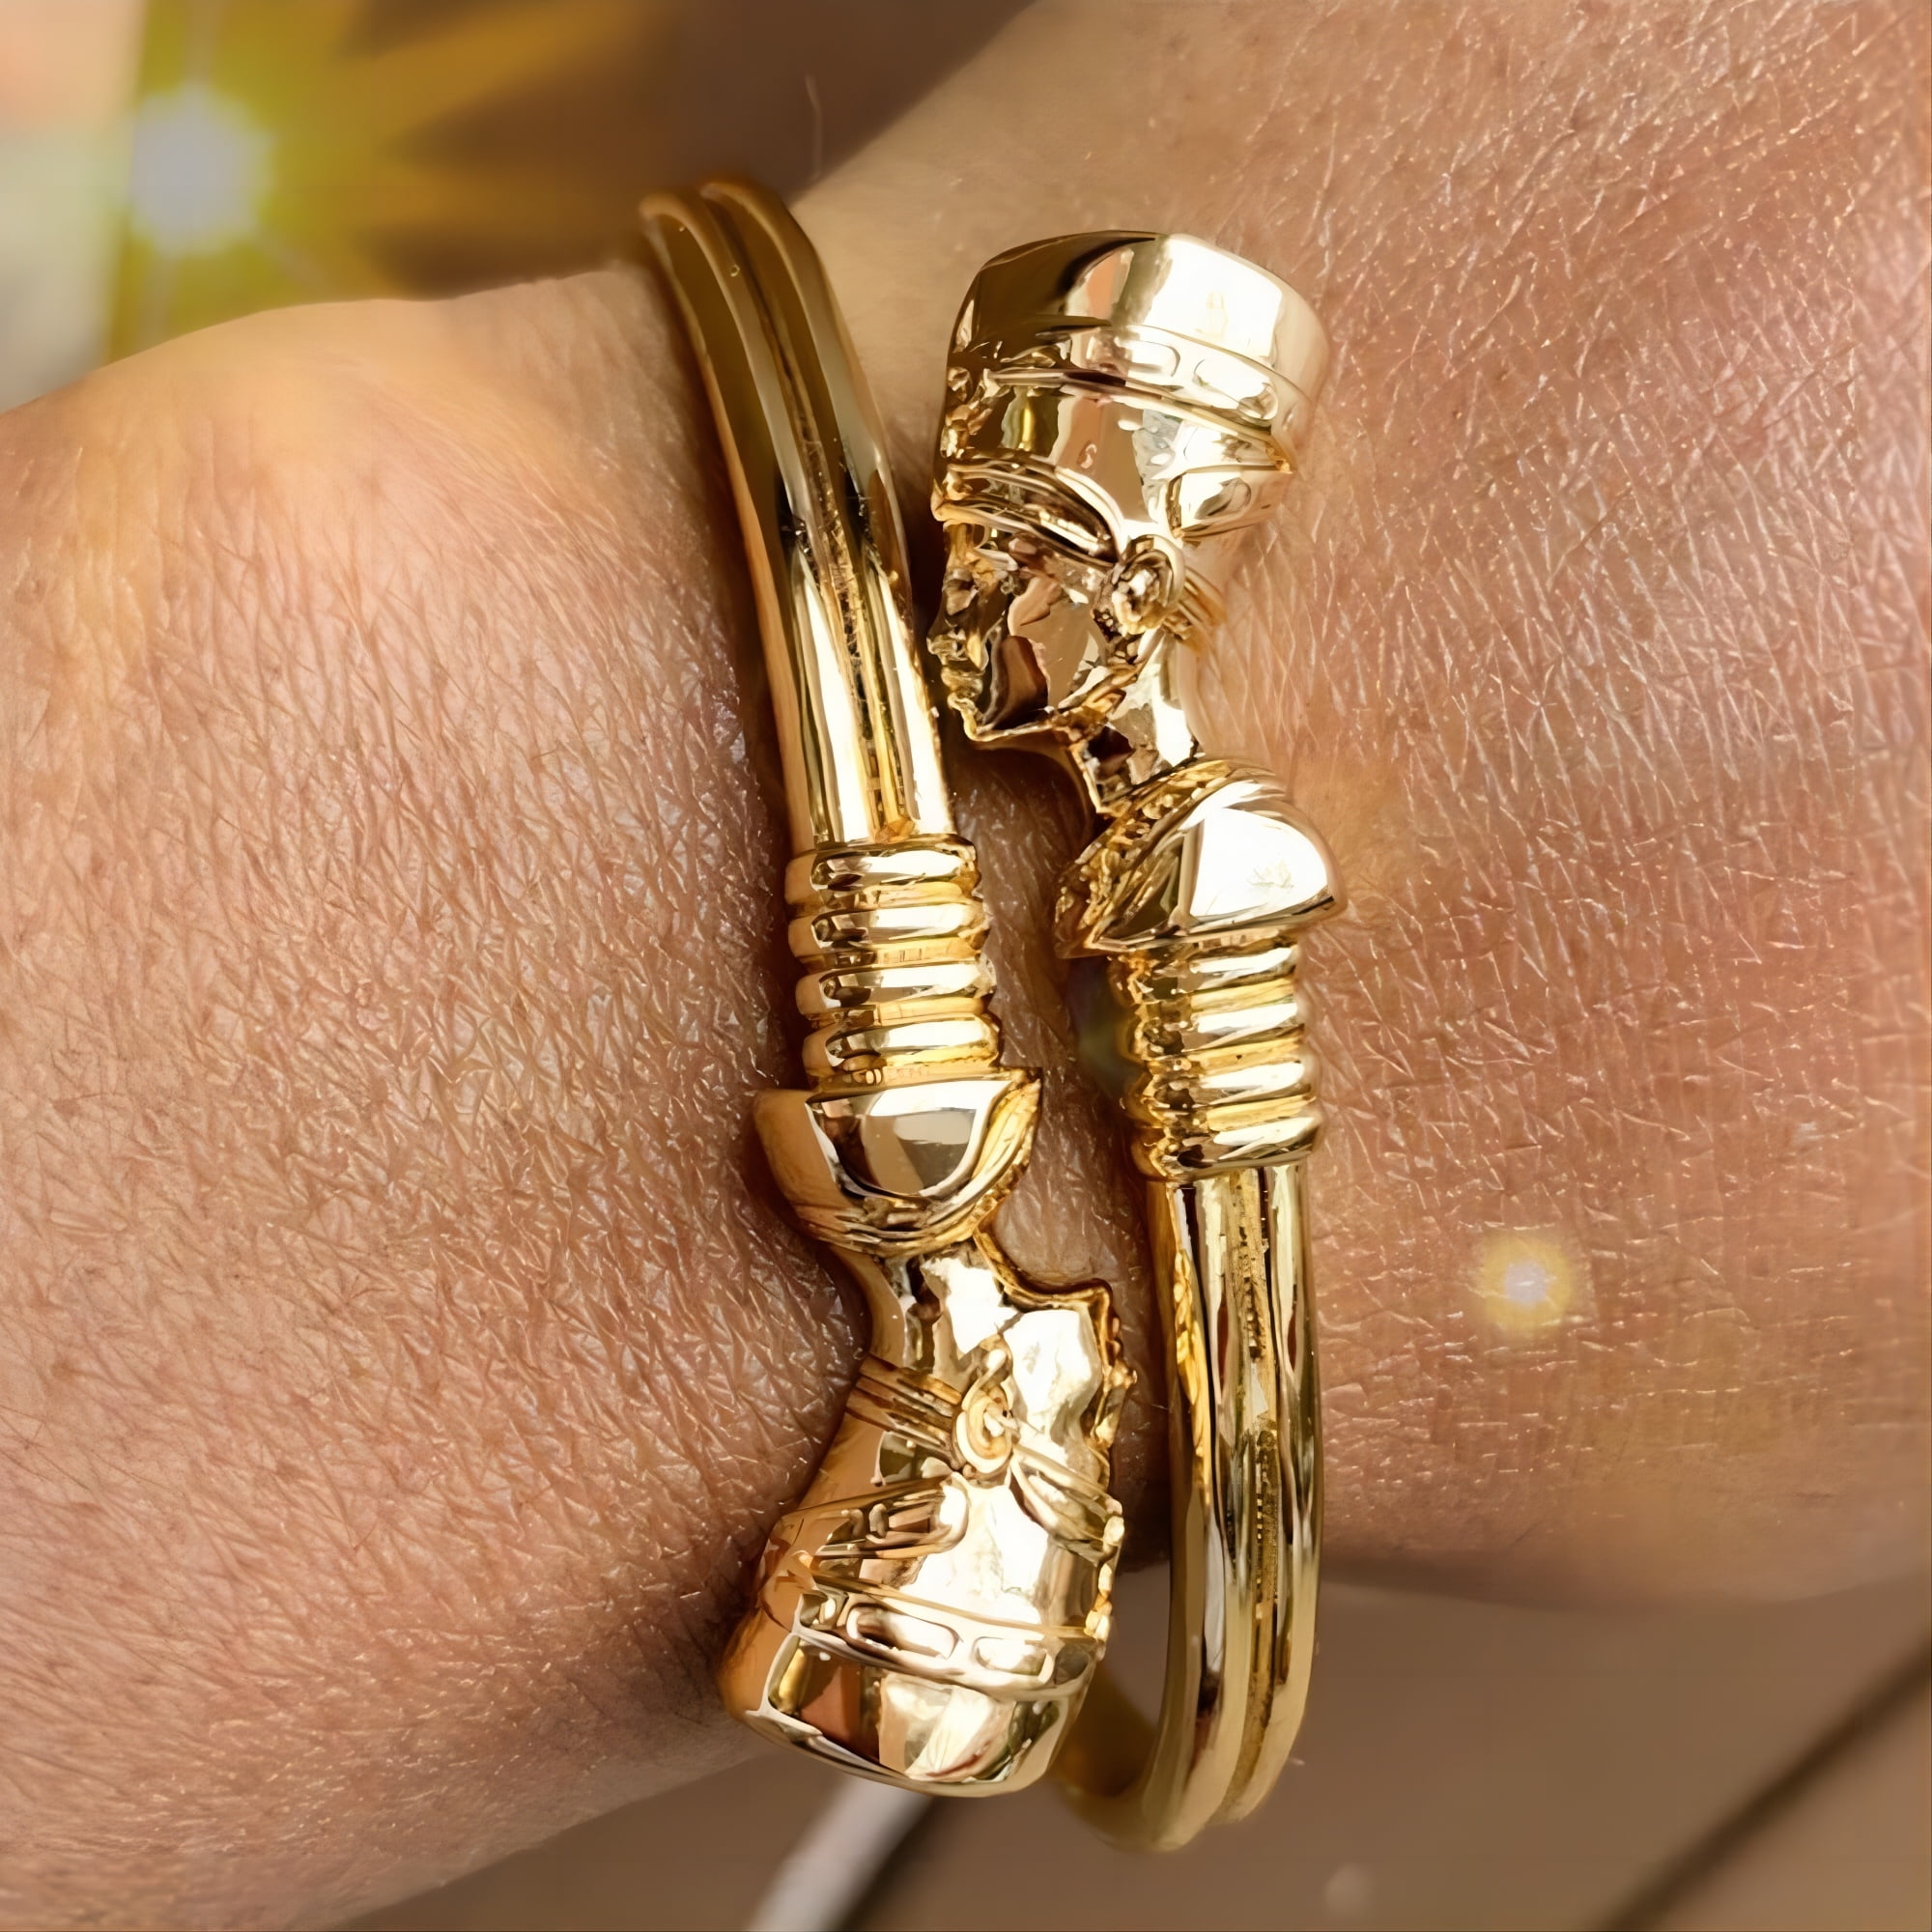 Ancient Egyptian bracelets get your wrist a unique piece of history on sale